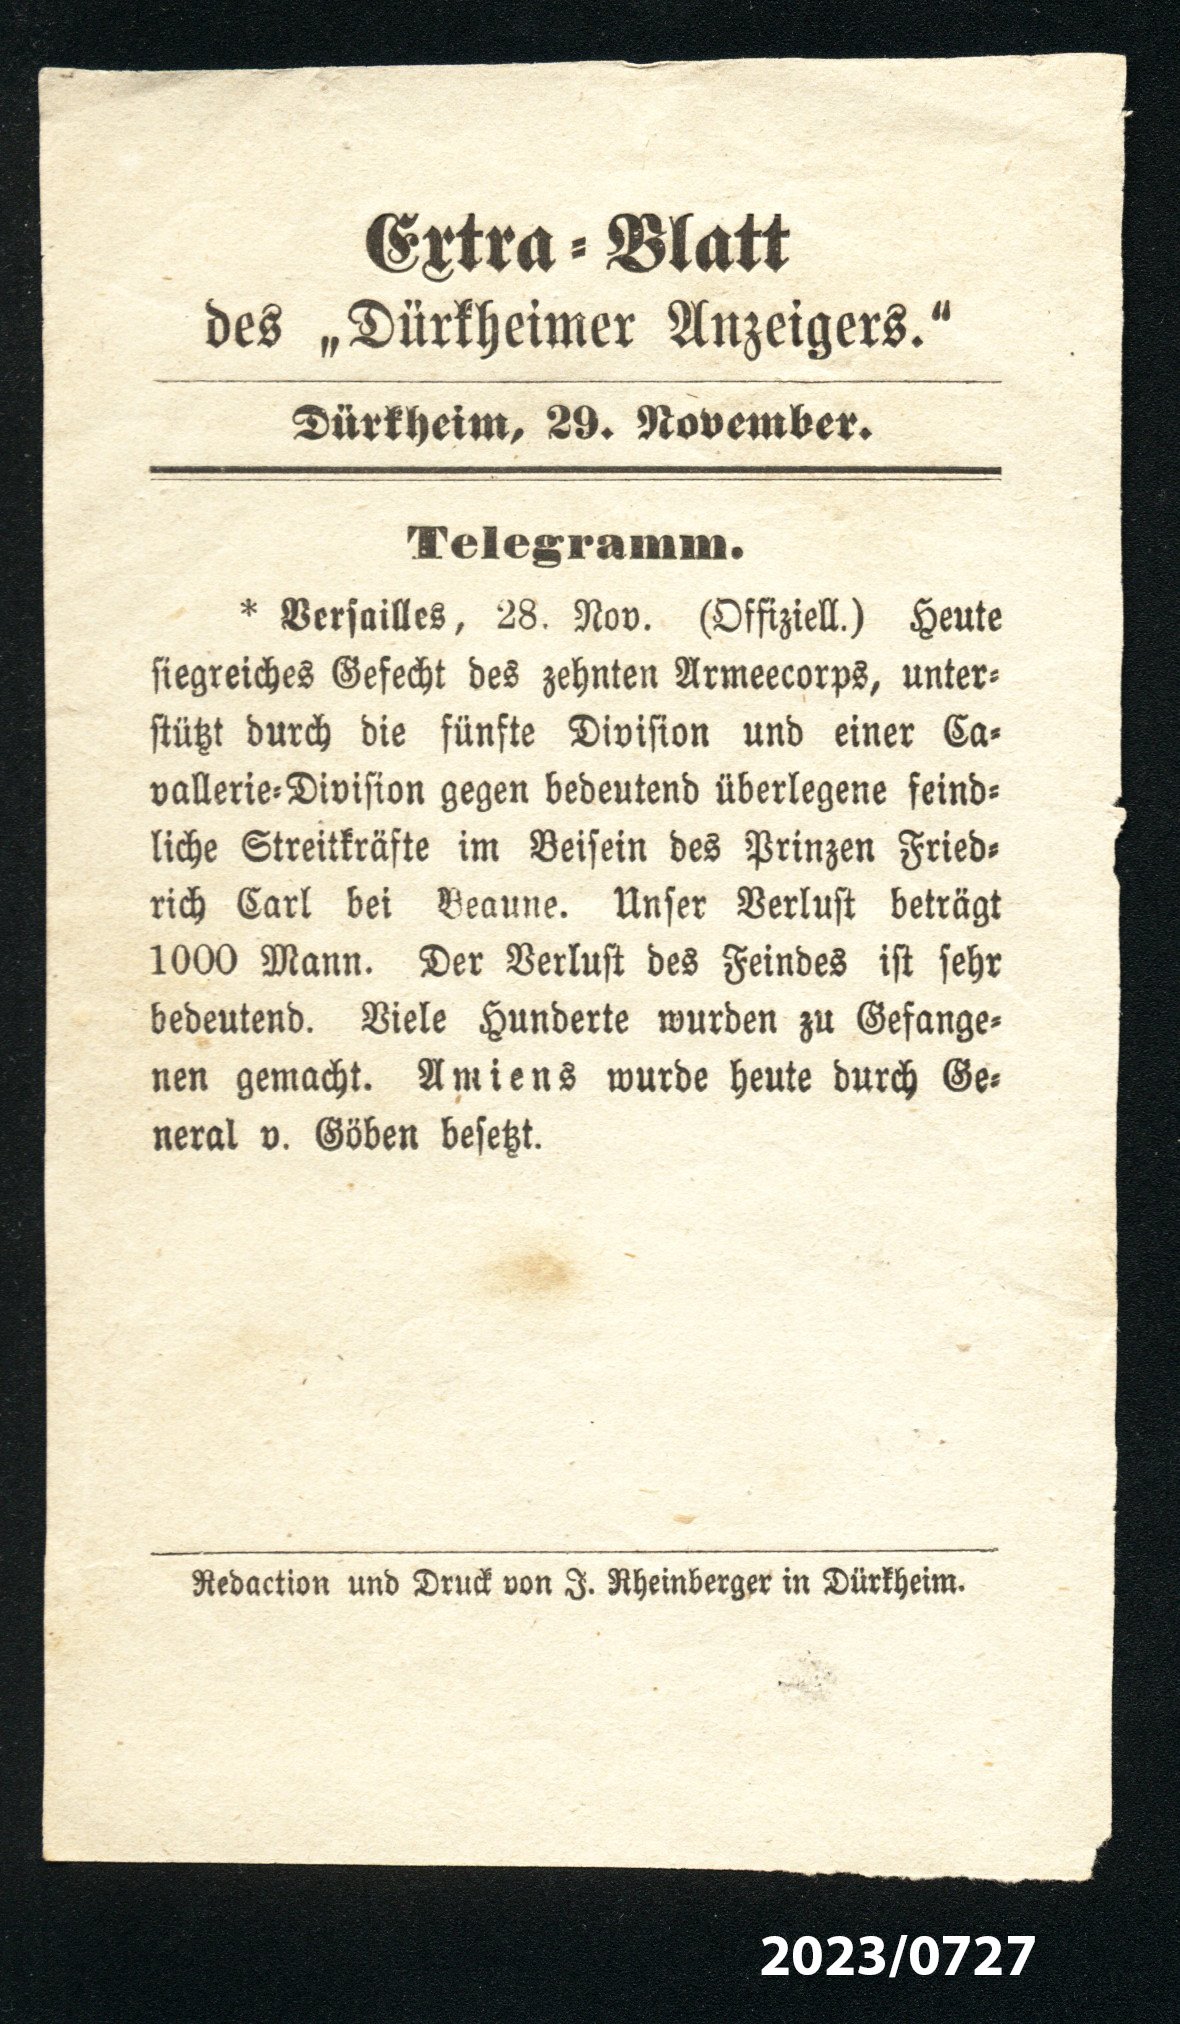 Extra-Blatt des "Dürkheimer Anzeigers." 29.11.1870 (Stadtmuseum Bad Dürkheim im Kulturzentrum Haus Catoir CC BY-NC-SA)